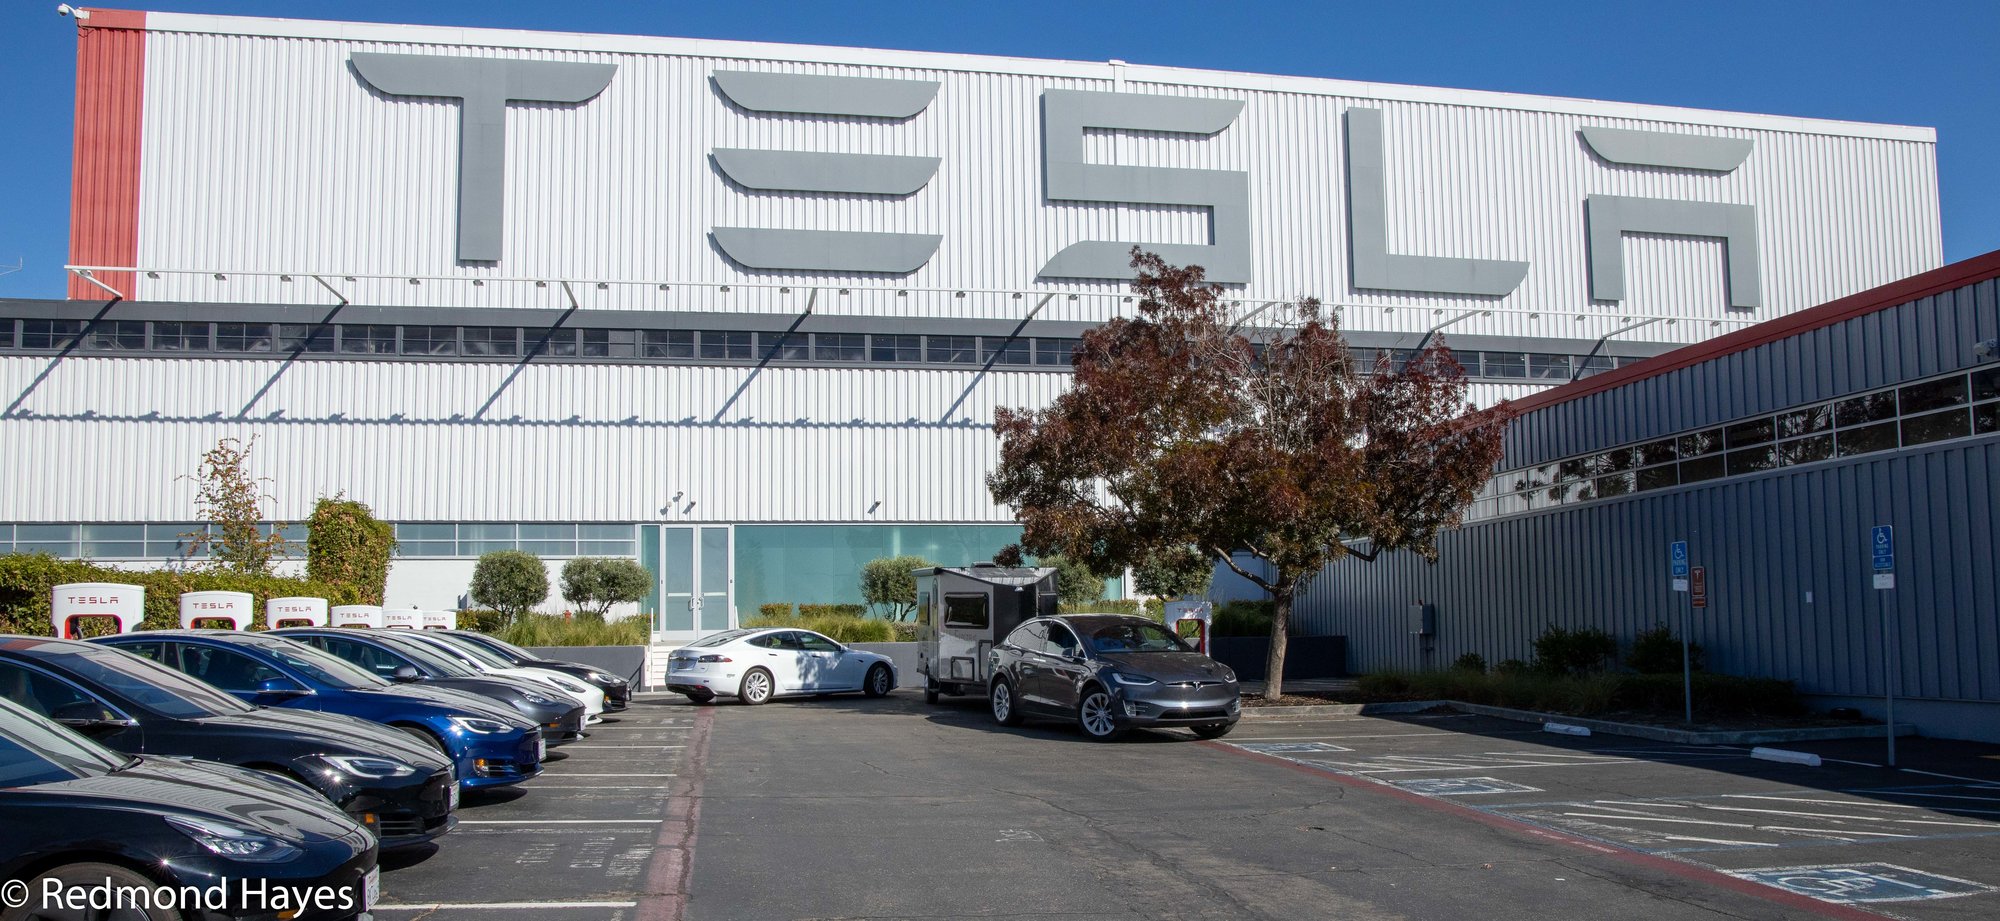 Duo en recharge Tesla Factory SC 20 octobre 2019-2 (1 sur 1).jpg